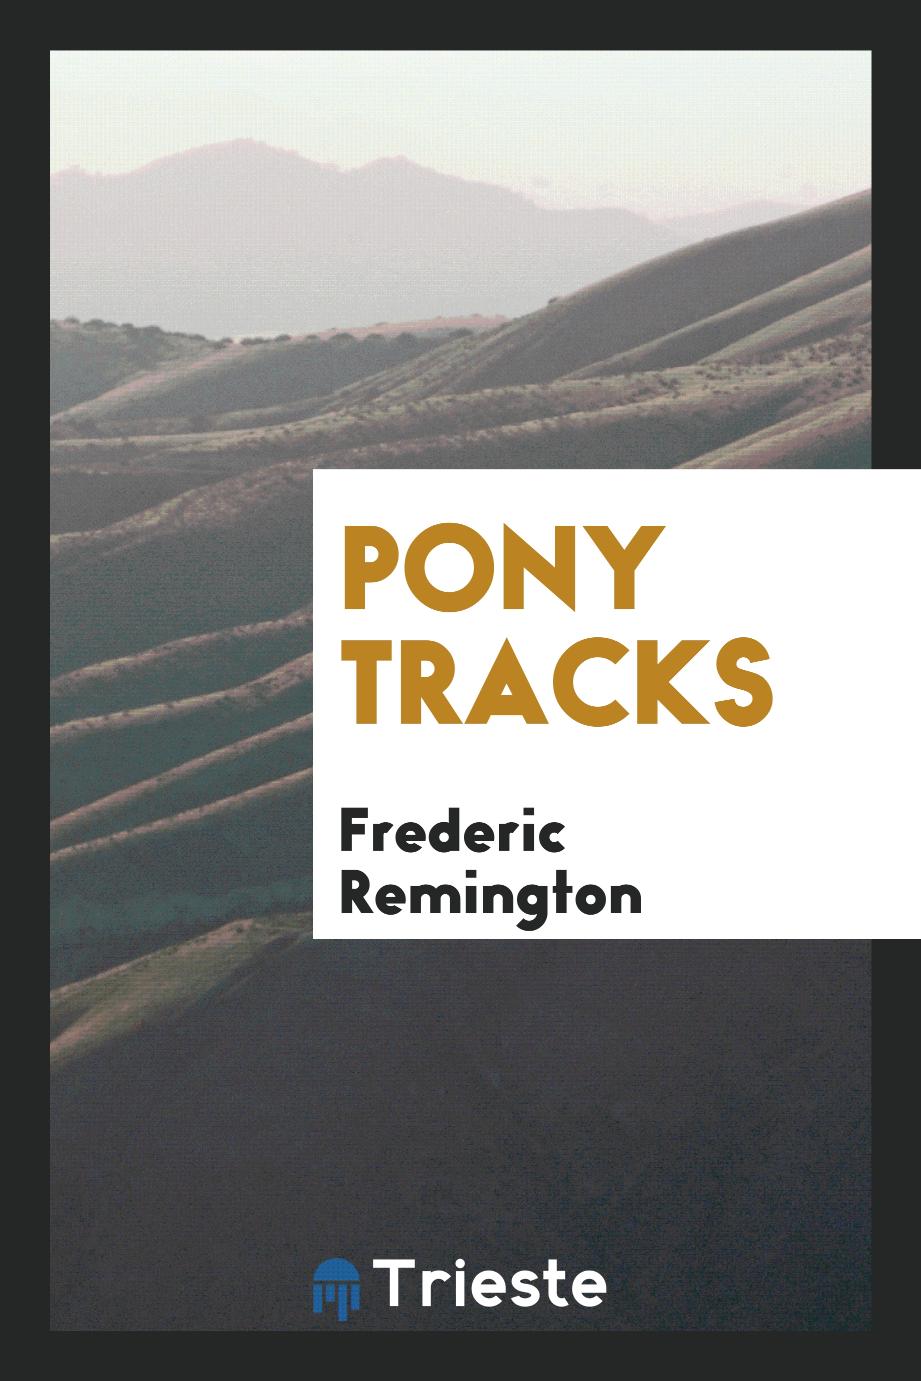 Pony tracks